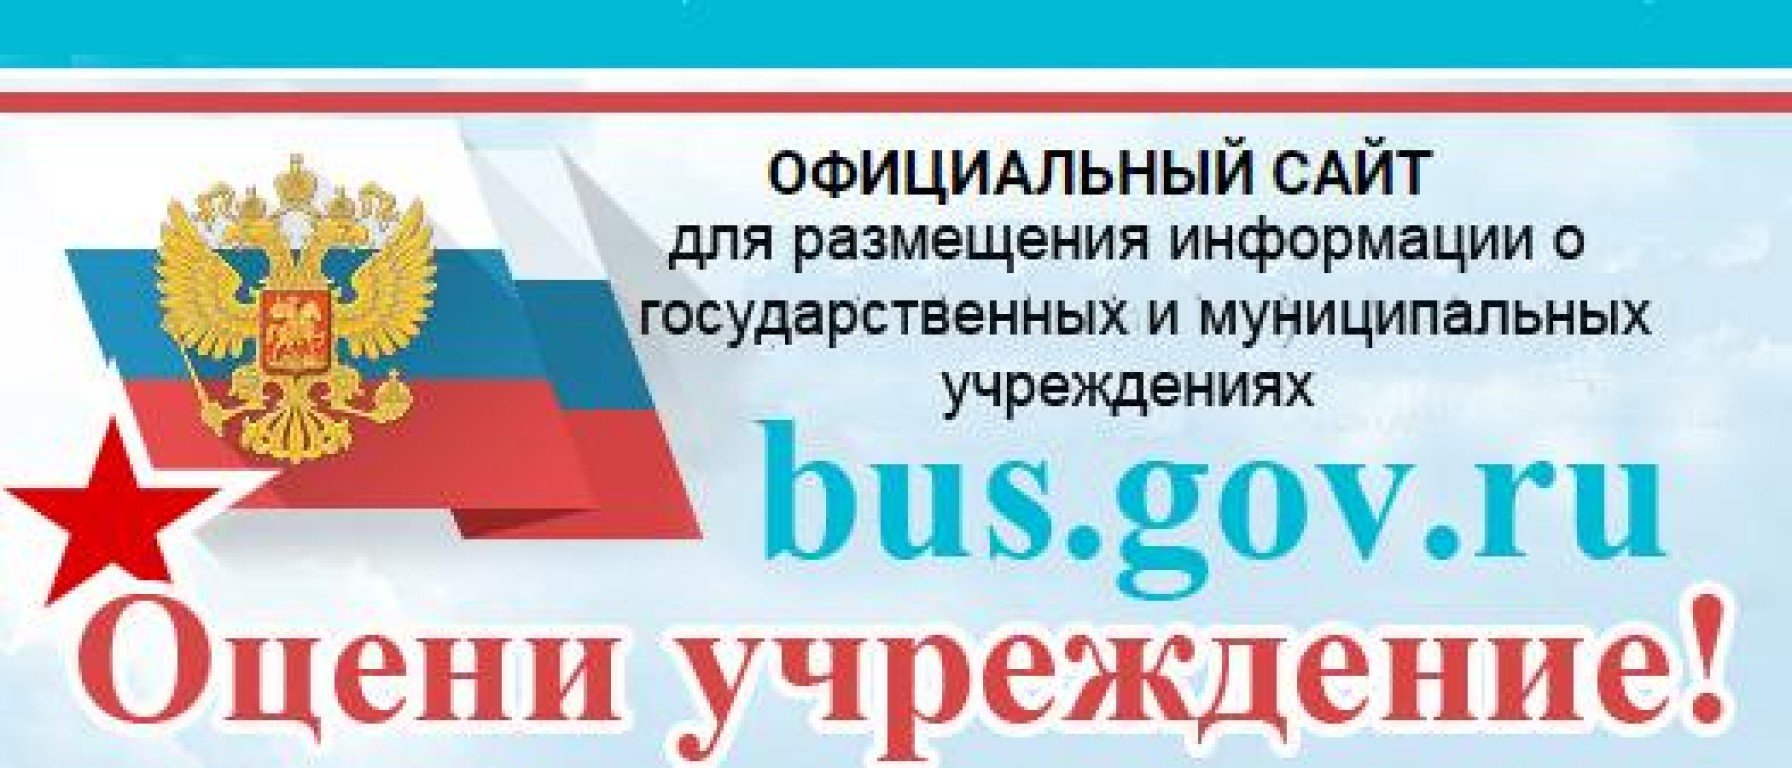 Https khv gov ru. Бас гов ру баннер. Bus gov баннер. Bus.gov.ru. Bus.gov.ru баннер.